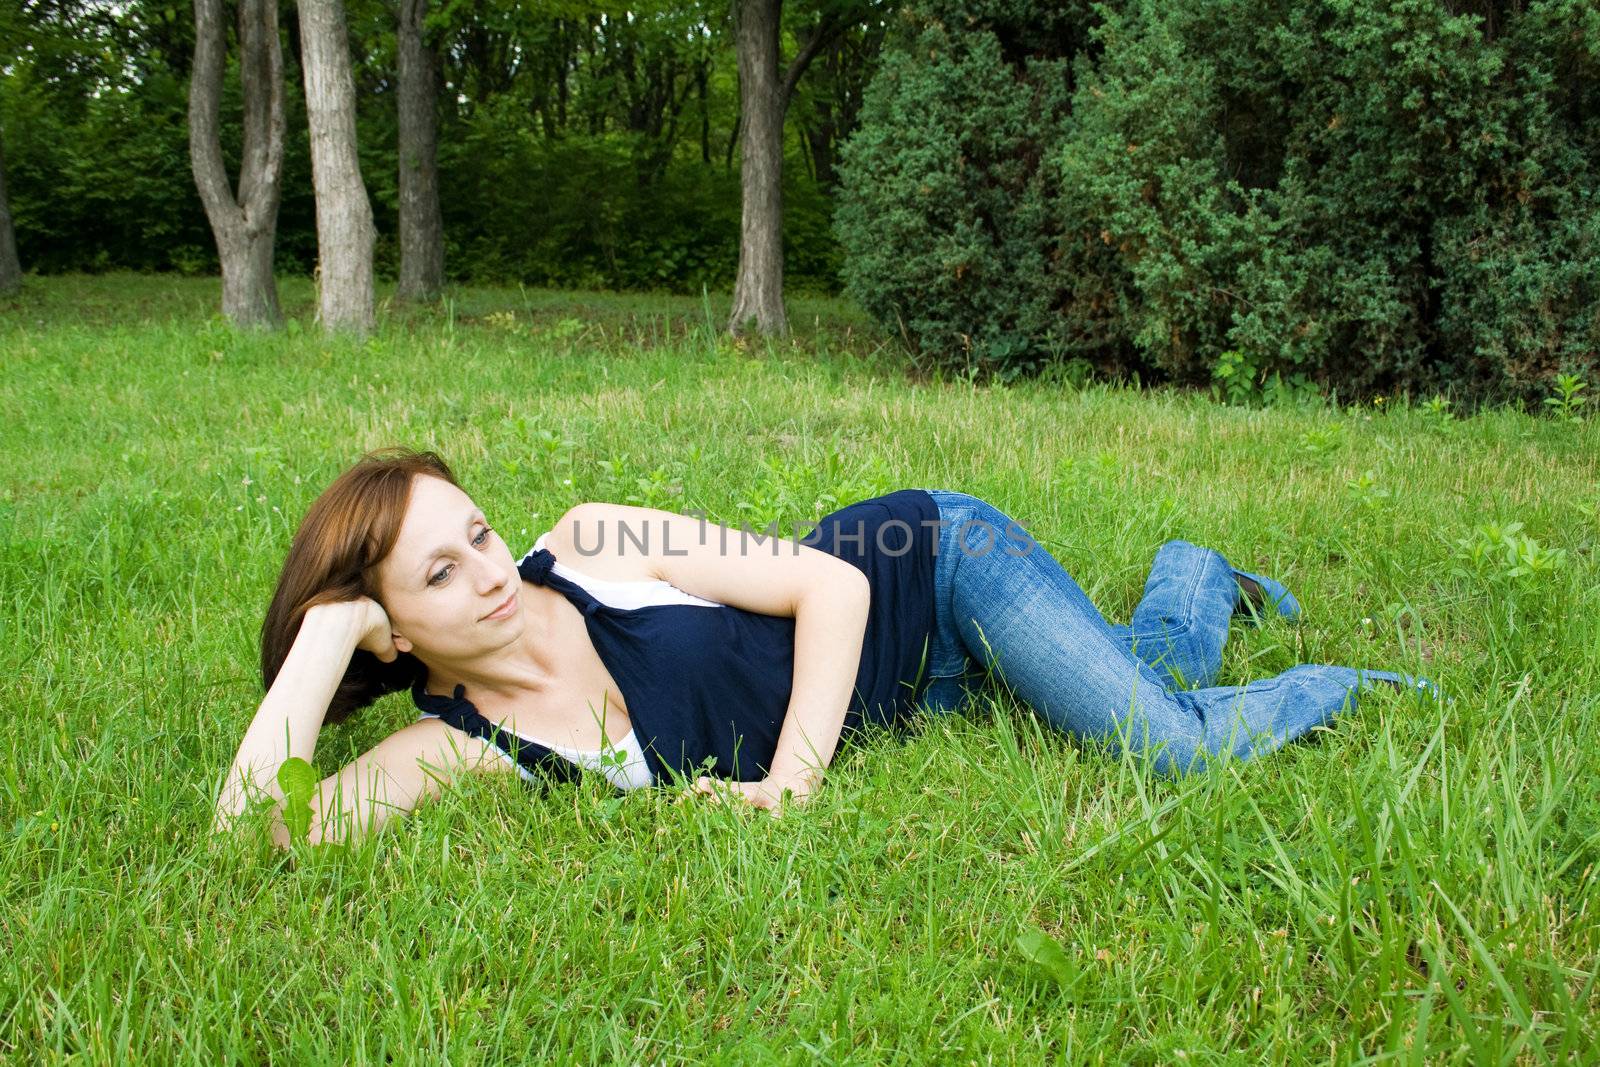 Beautiful girl lying on the grass enjoying the peace by Irina1977